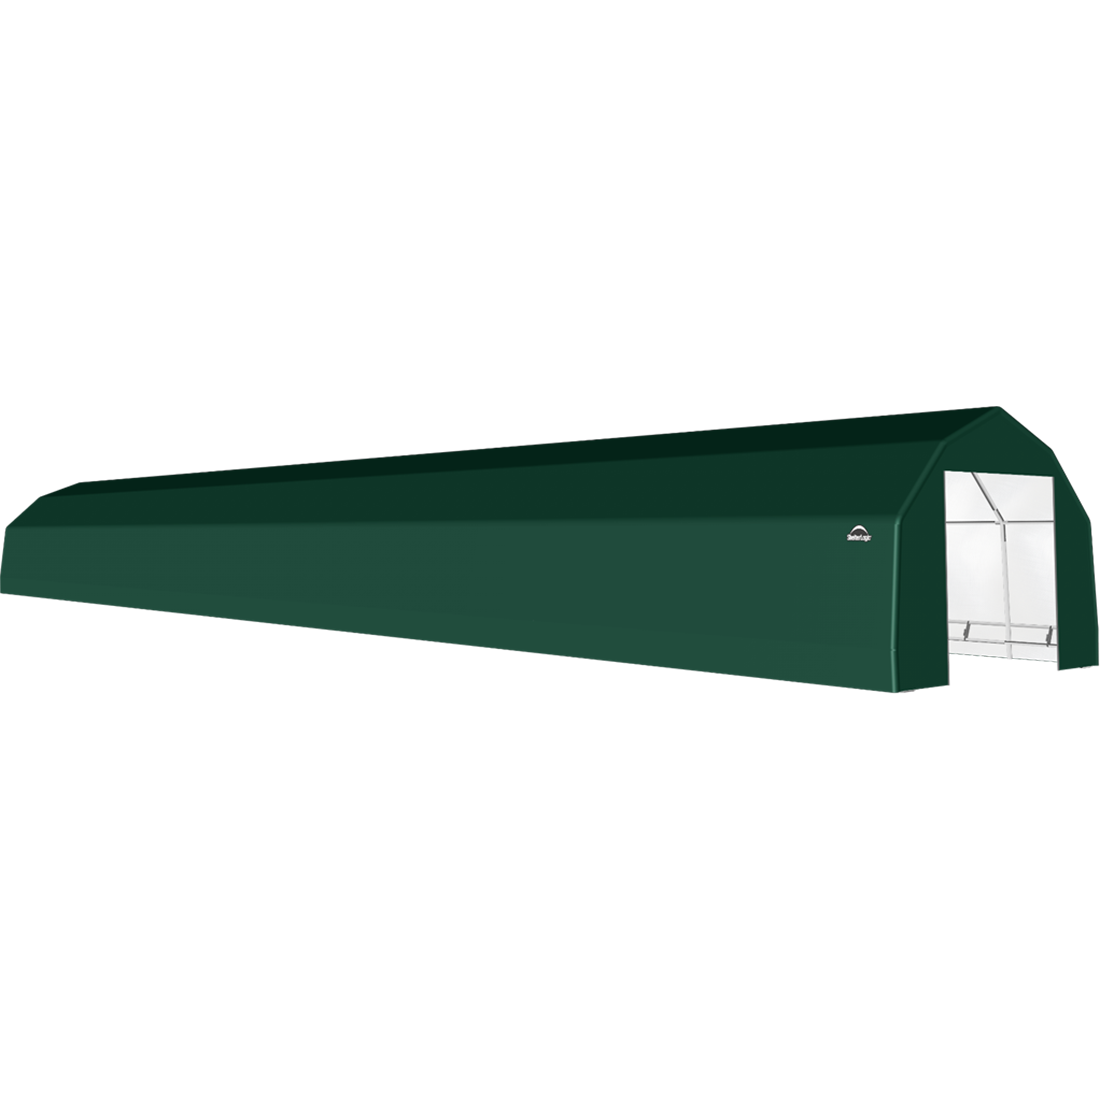 ShelterTech SP Series Barn Shelter, 15 ft. x 100 ft. x 11 ft. Heavy Duty PVC 14.5 oz. Green